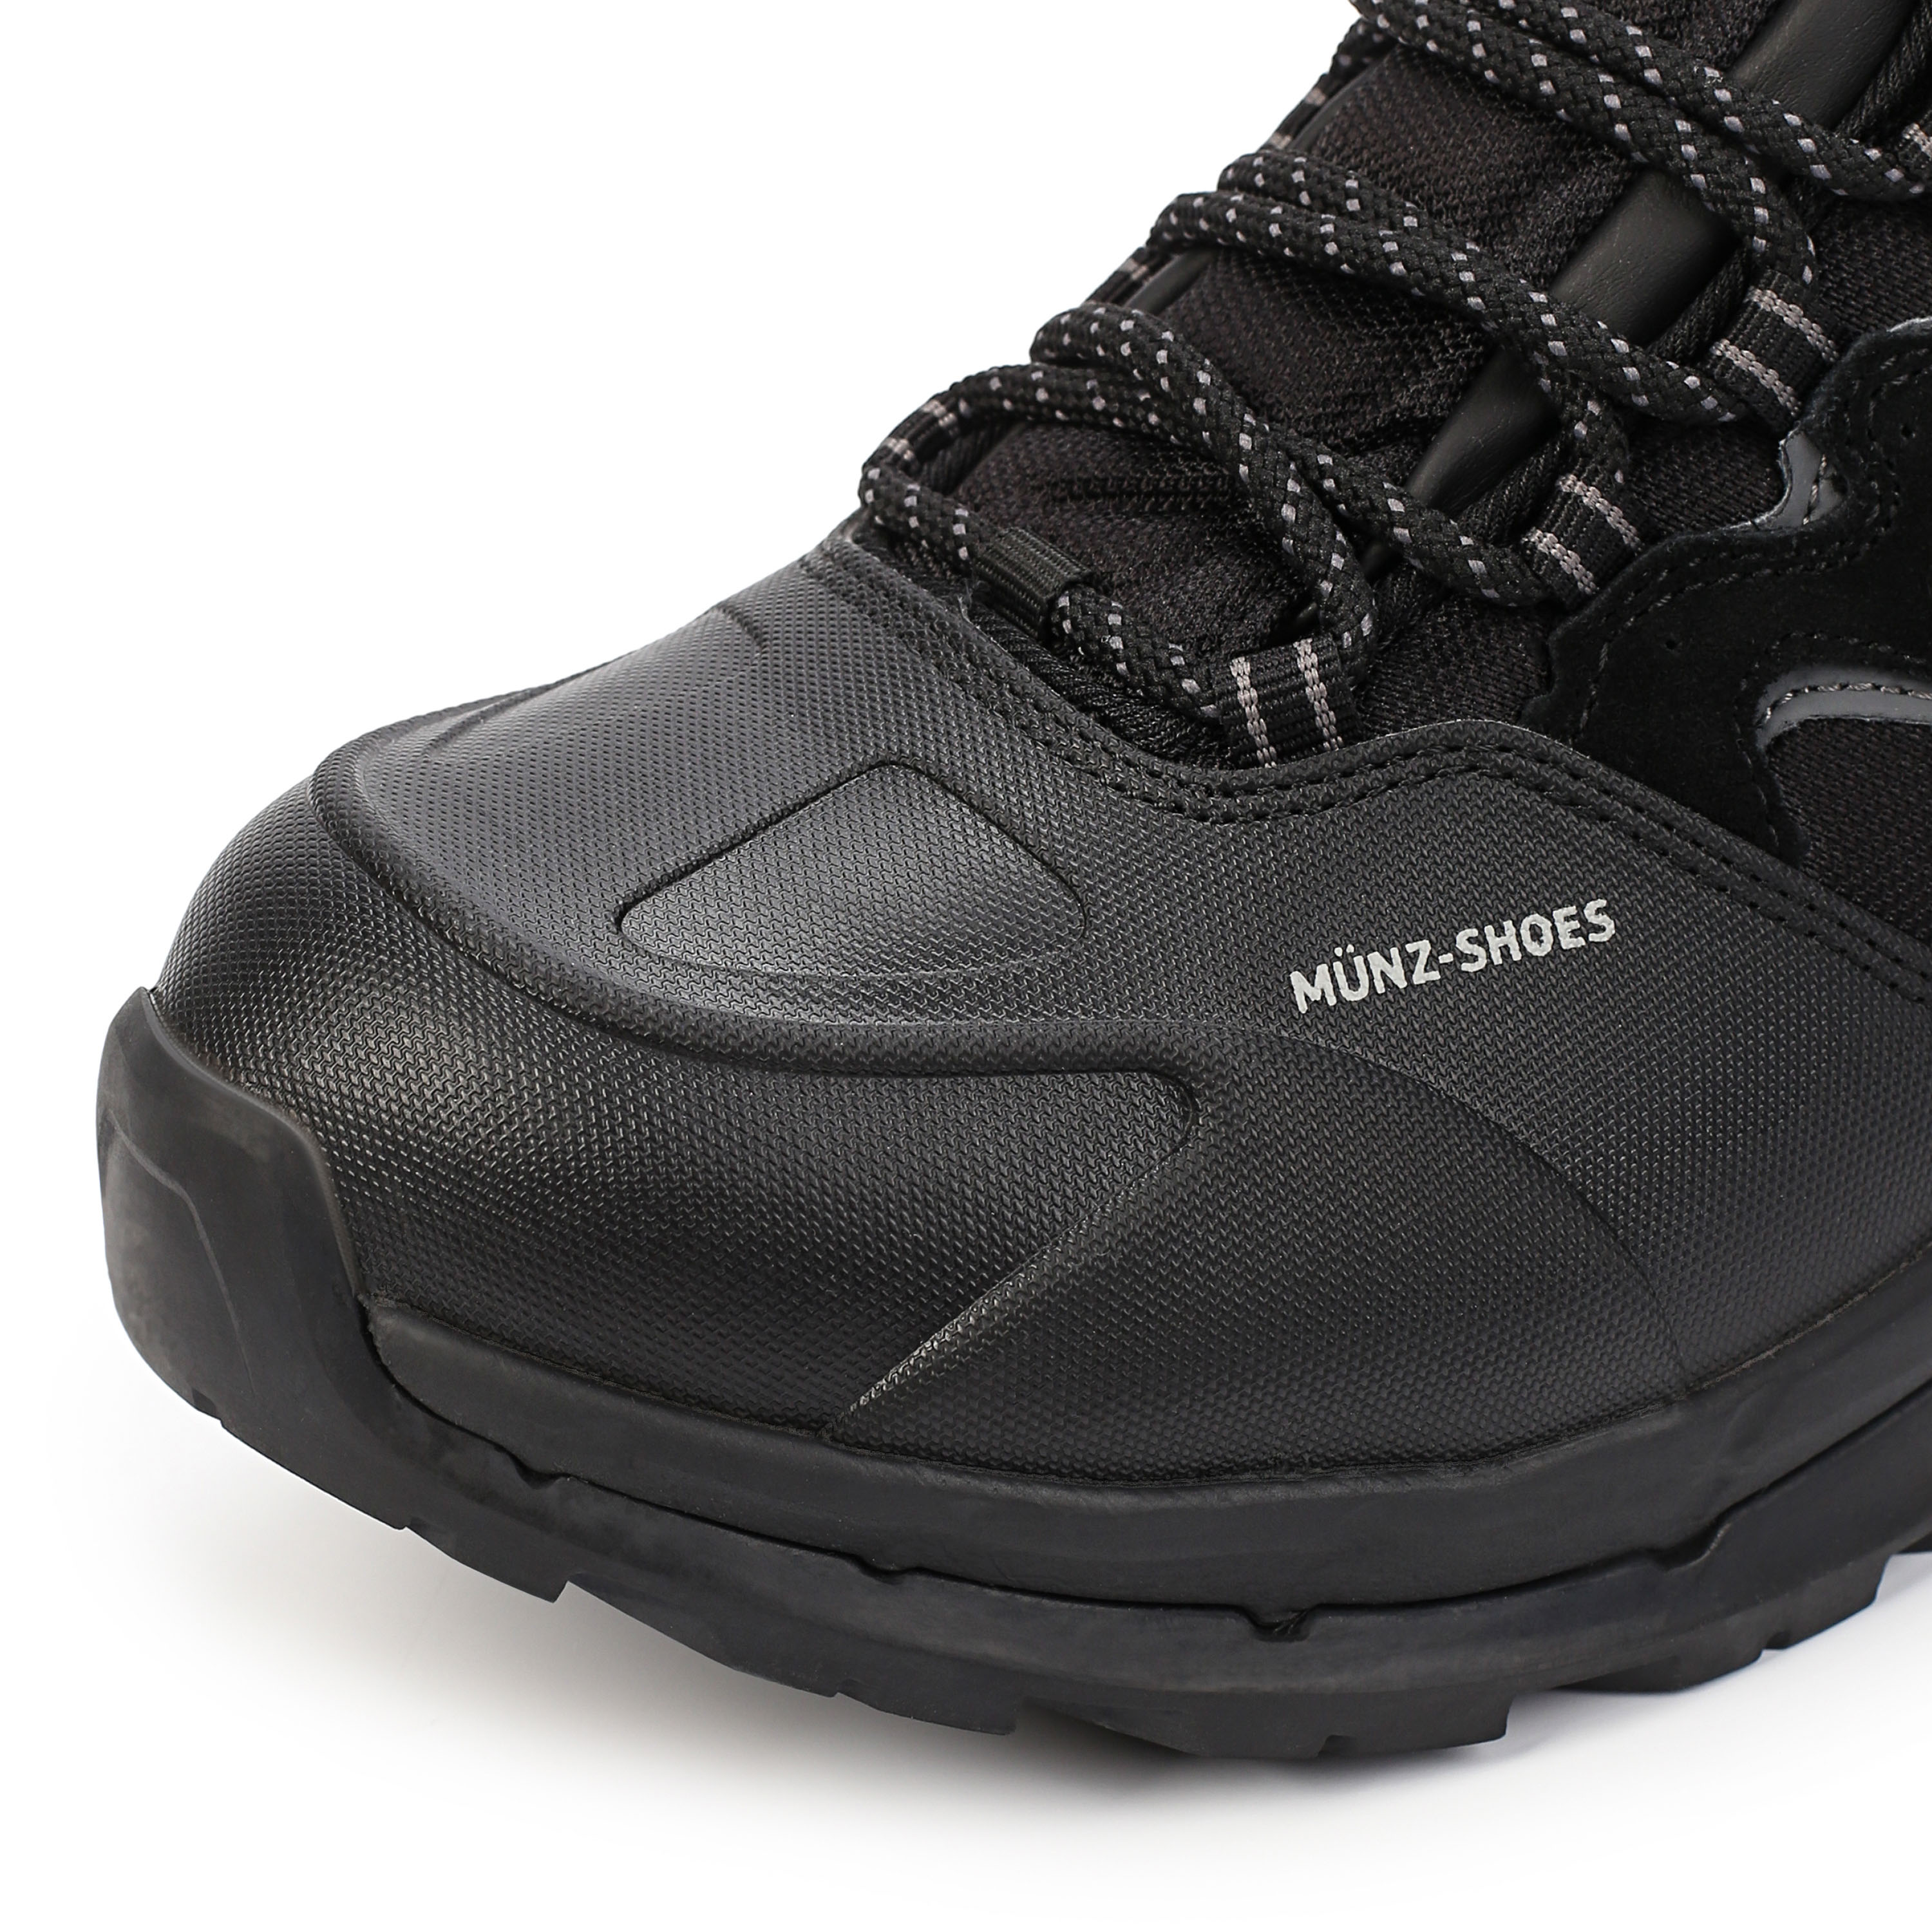 Ботинки MUNZ Shoes 050-004A-2602 050-004A-2602, цвет черный, размер 40 треки - фото 6